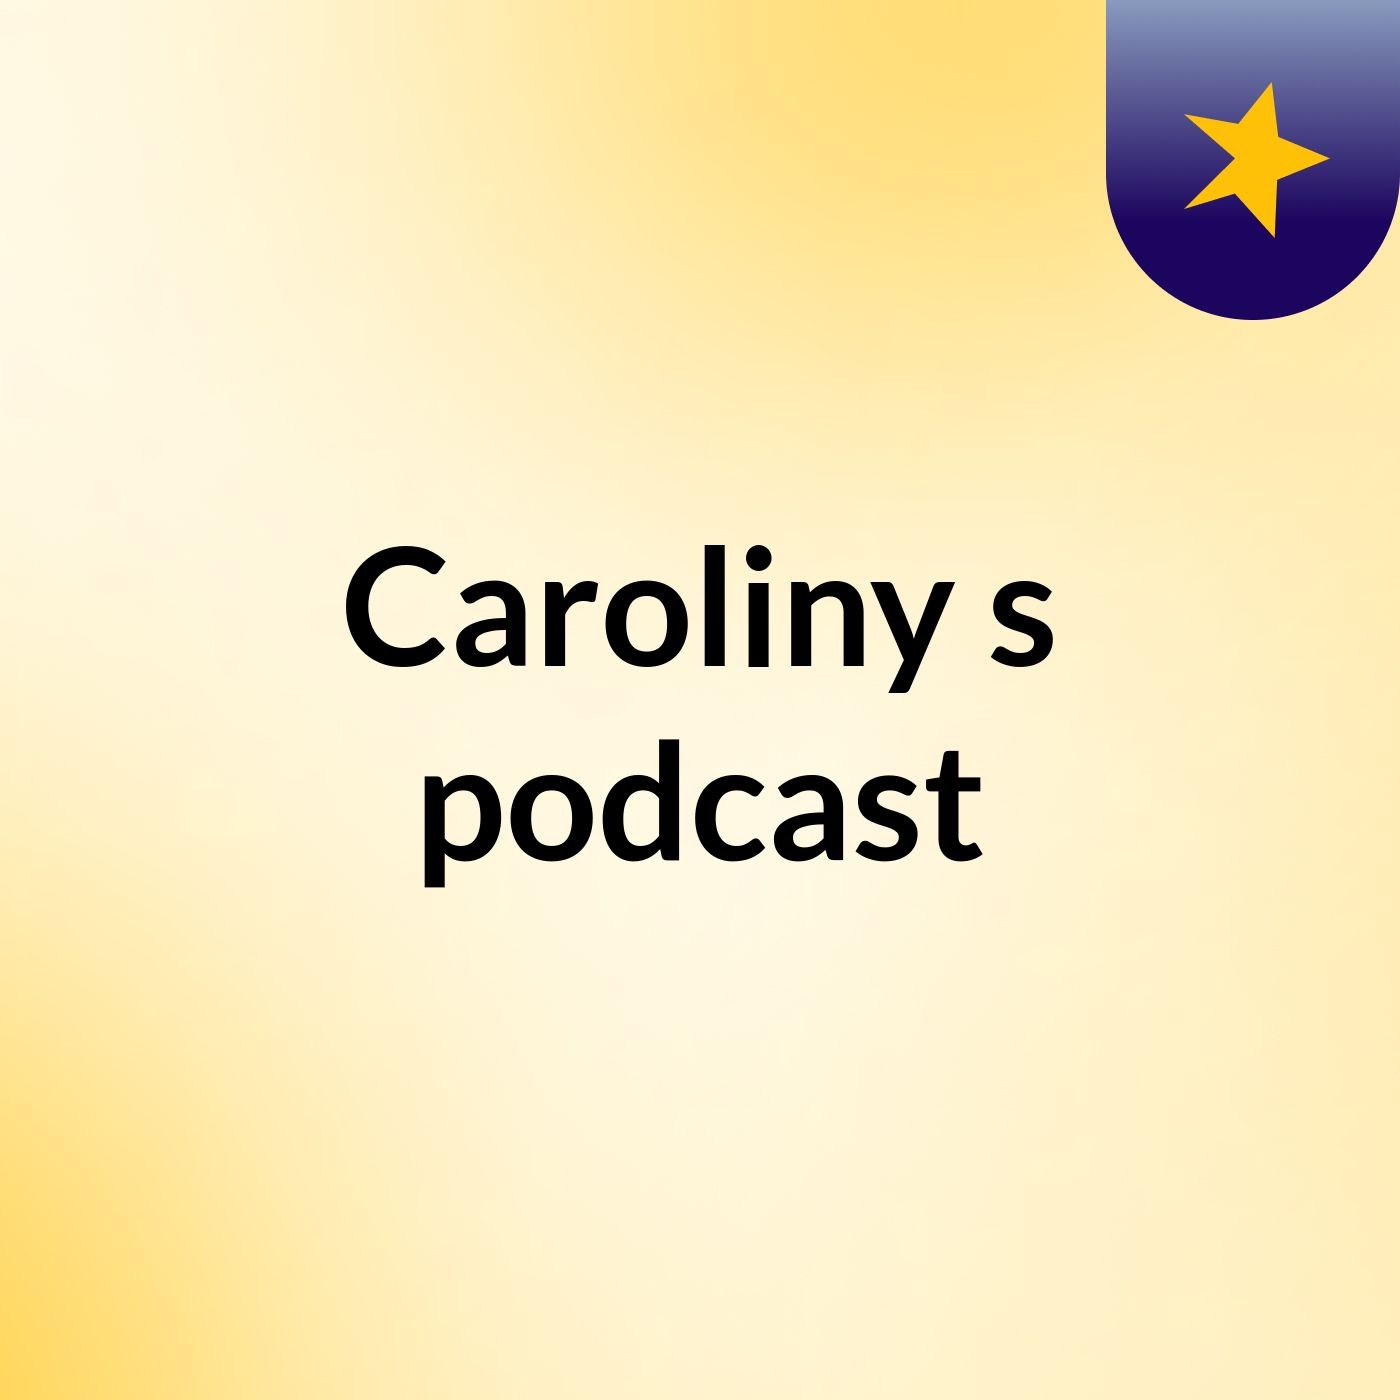 Caroliny's podcast